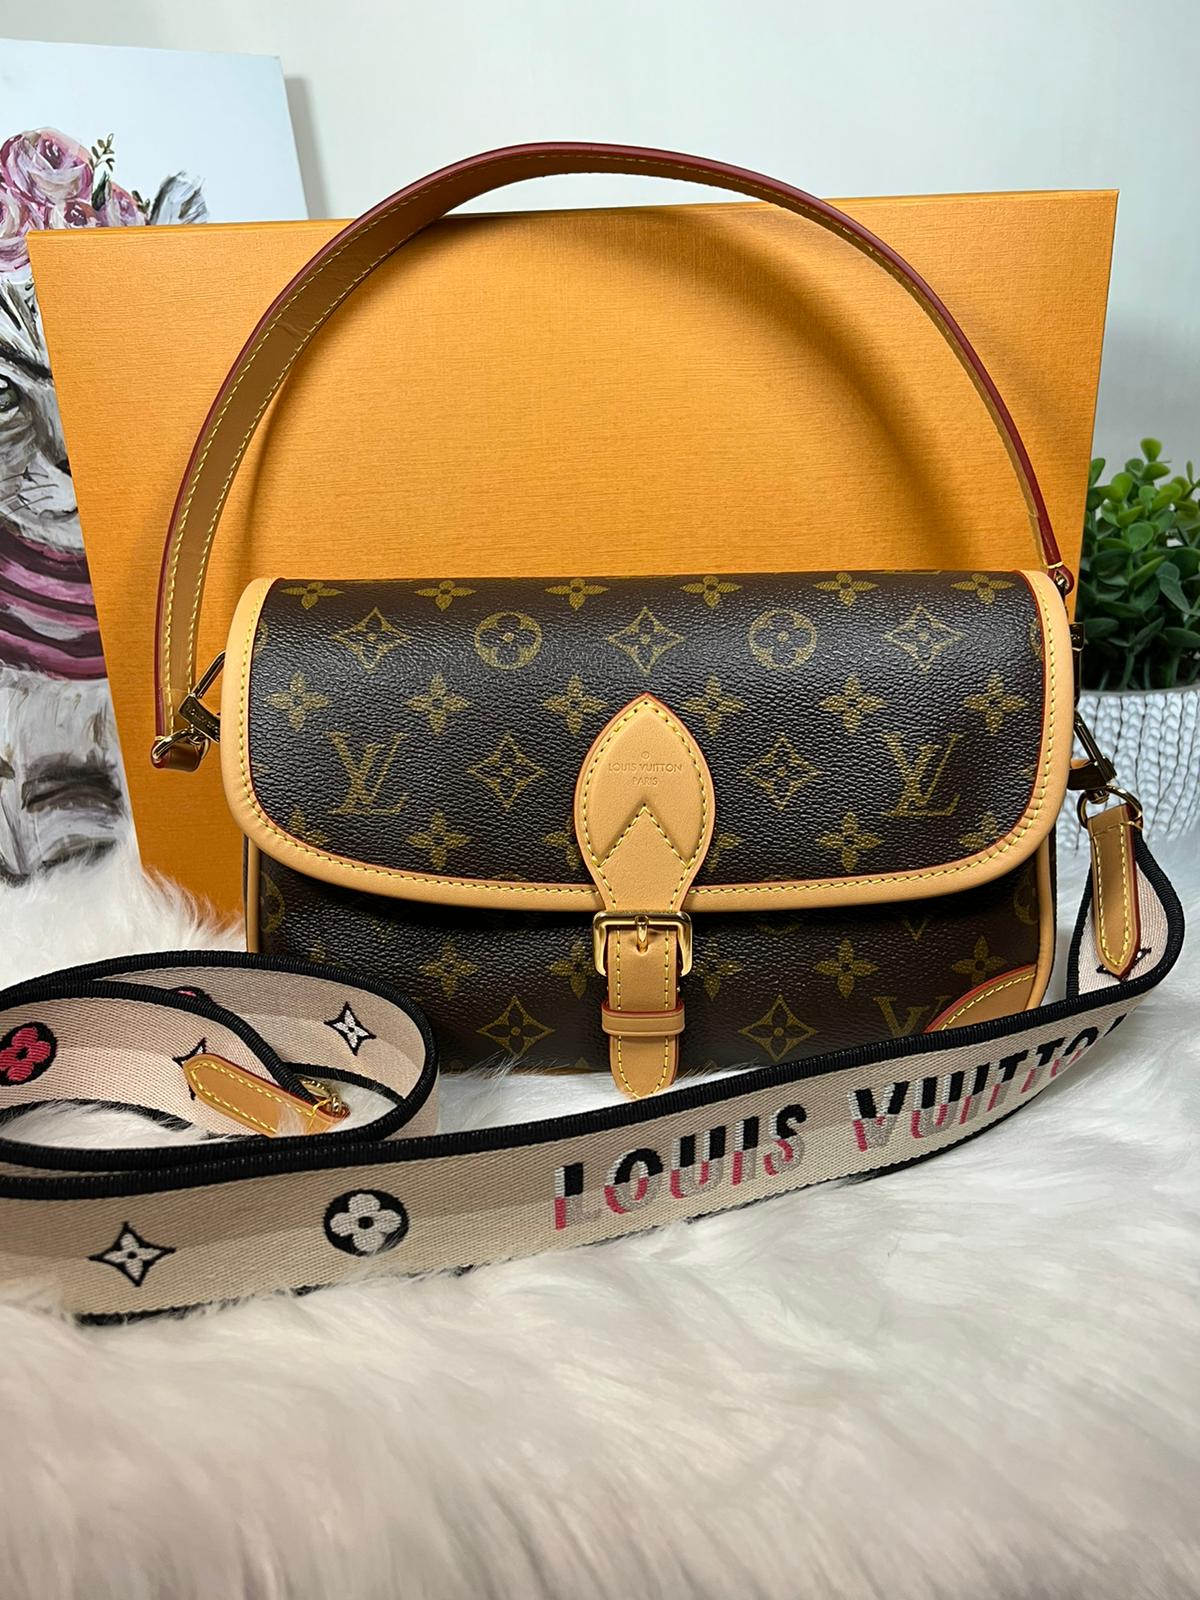 Louis Vuitton Diane NM Handbag Empreinte Leather Neutral 2335331